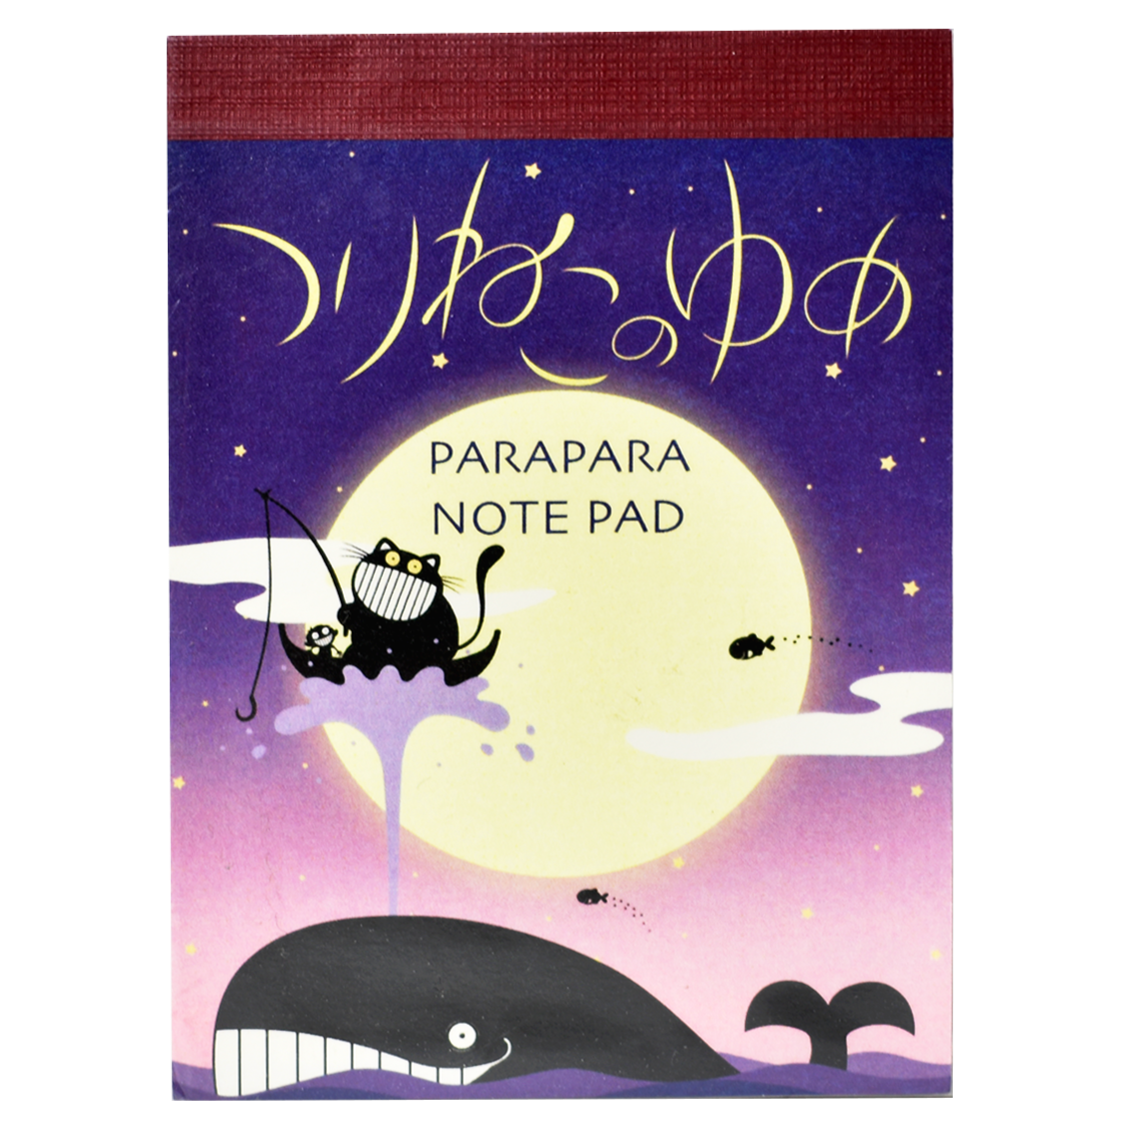 HOW HOUSE Parapara Flipbook Notepad "Yasunori Sugano - Moonsalto"